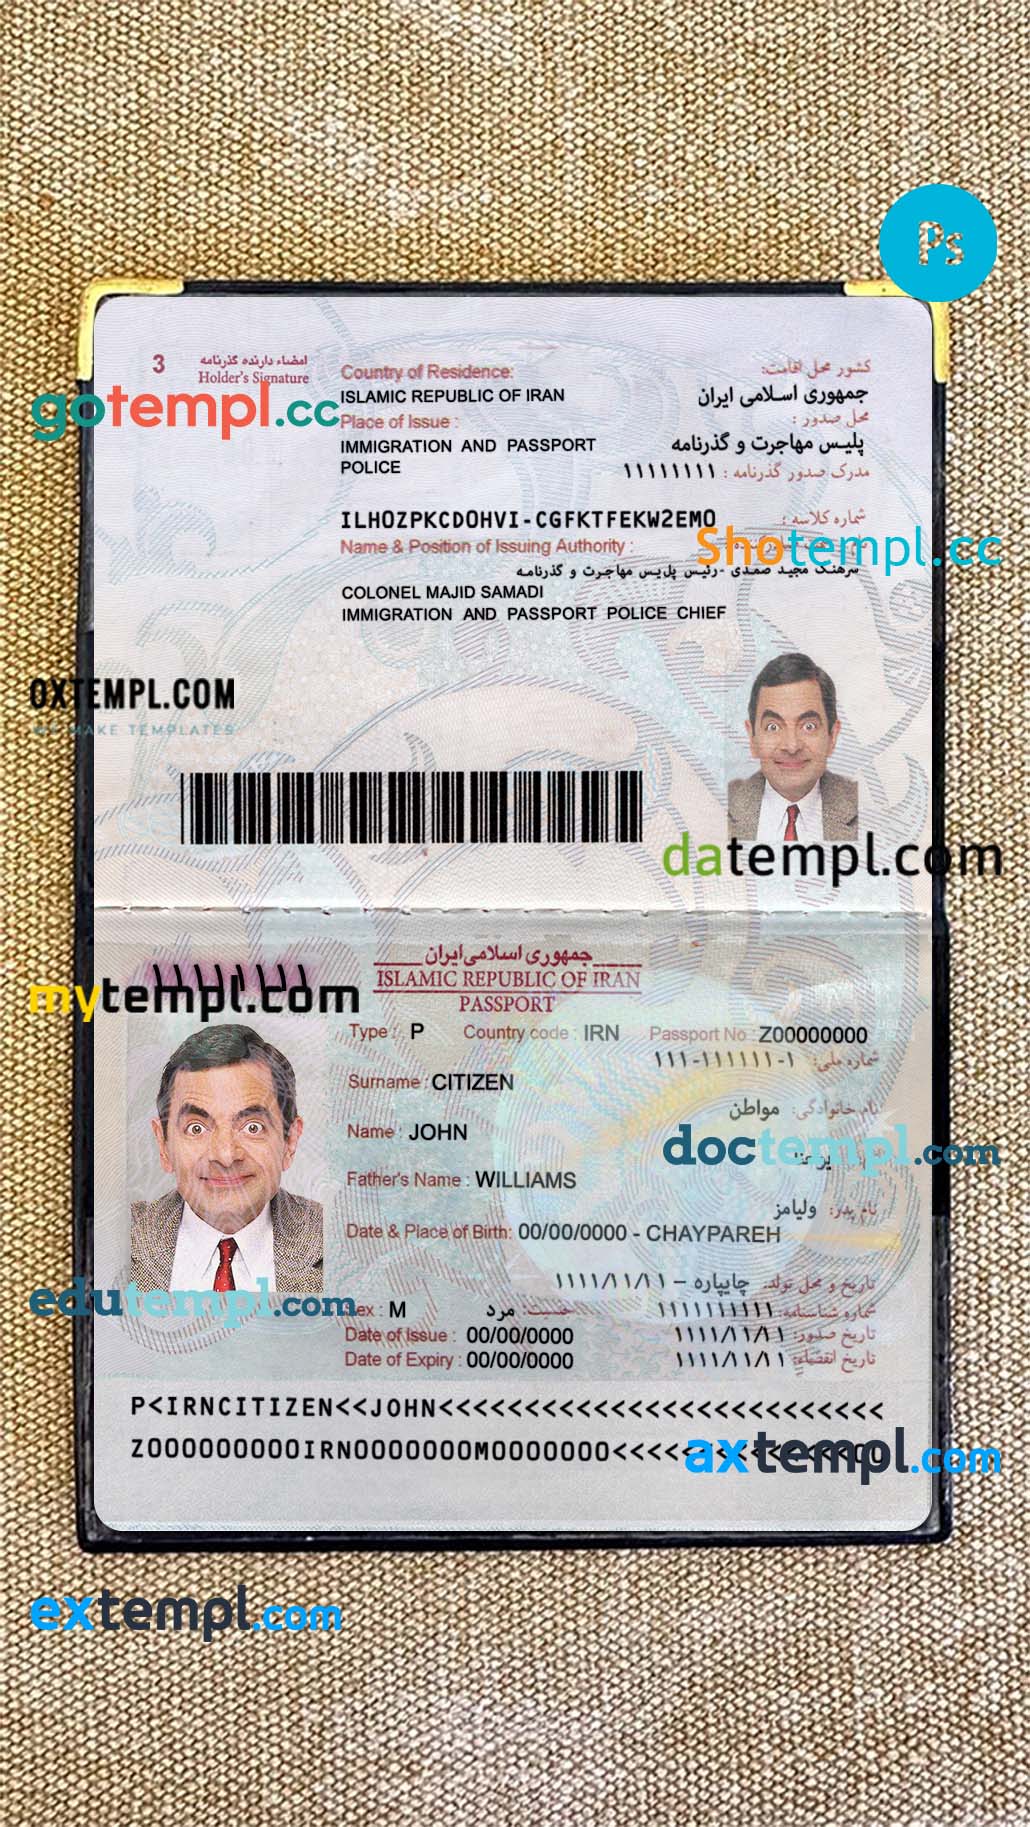 Pakistan vital record birth certificate PSD template, fully editable